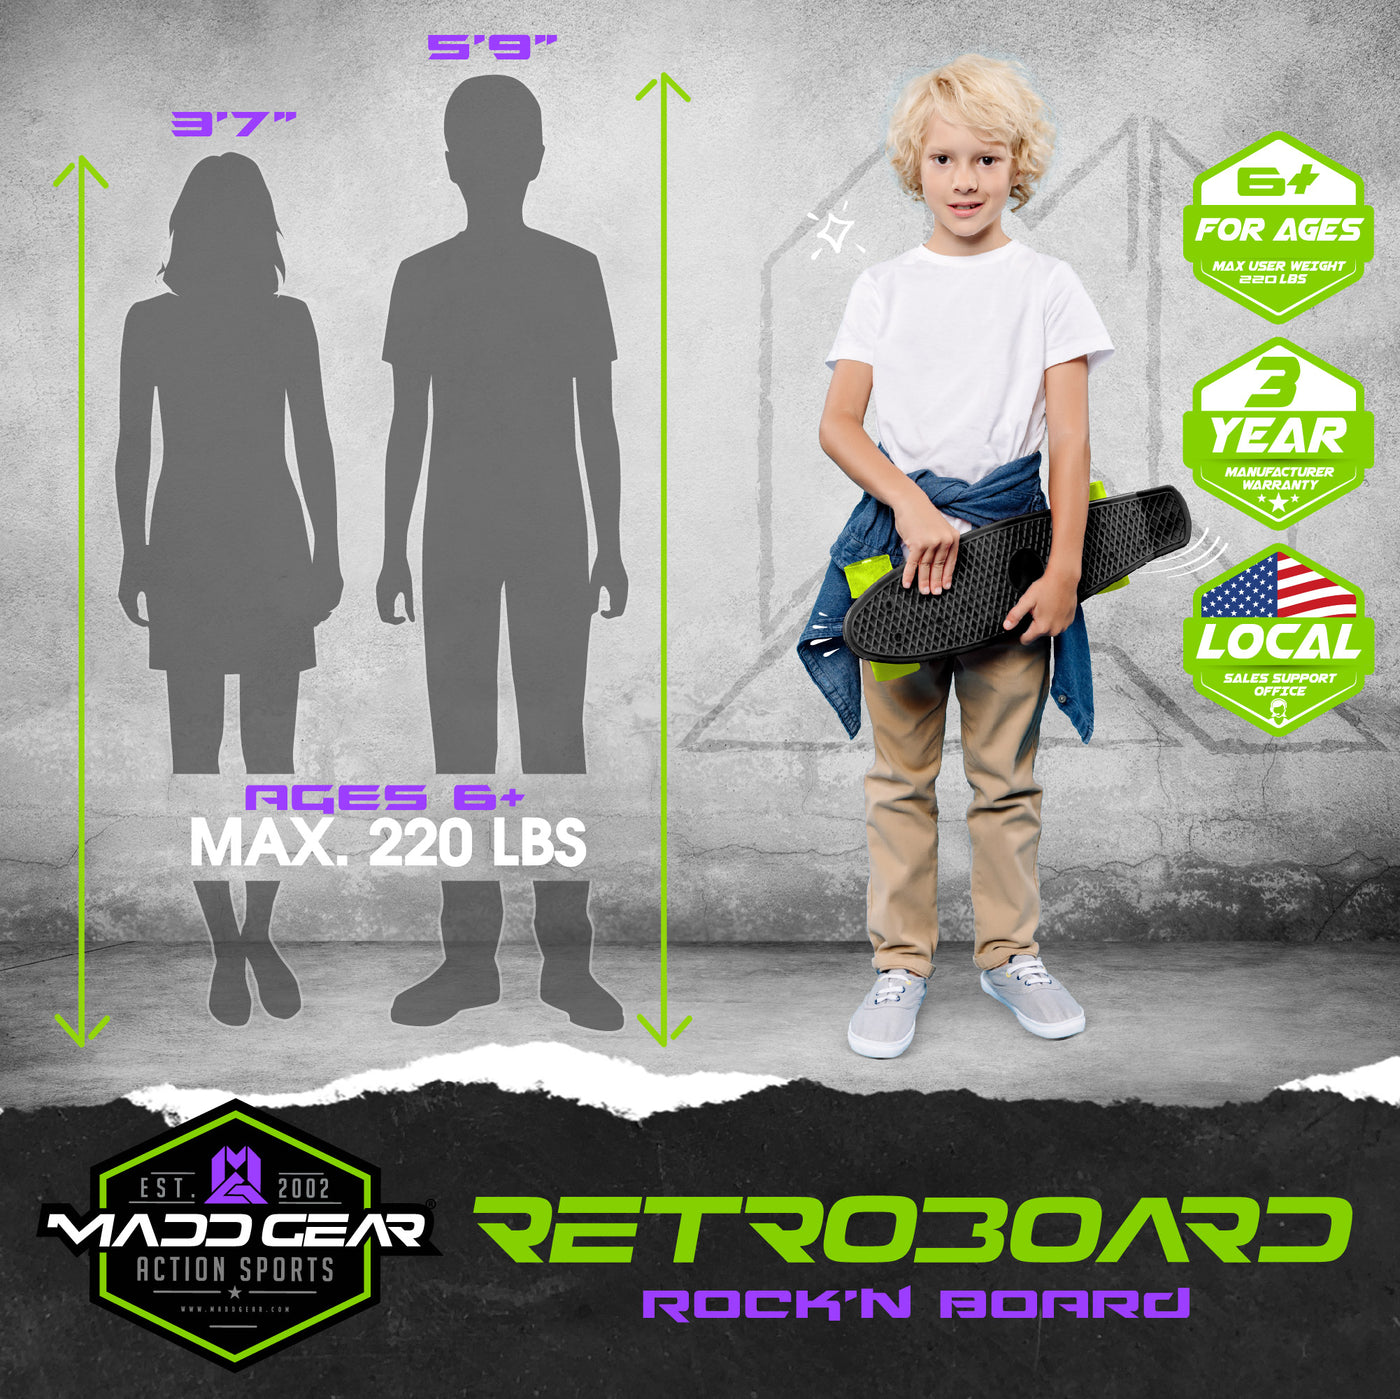 Madd Gear Retro Board Skateboard Penny 22" Plastic Flexible Kids Children Complete High Quality Green Compact Skateboard